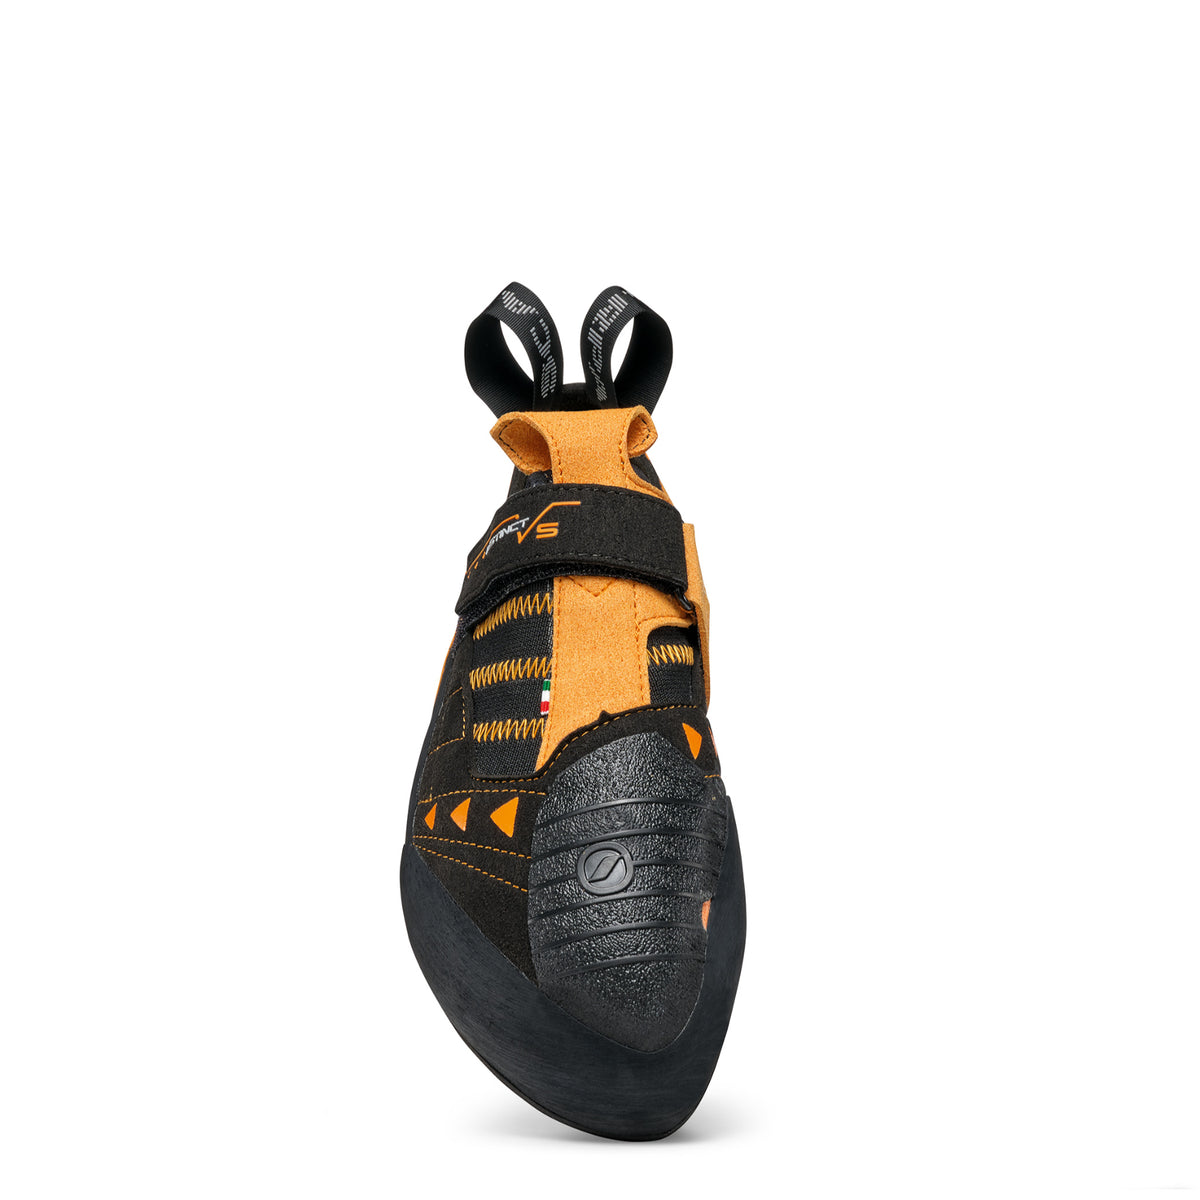 Scarpa Instinct VS climbing shoe in black/orange. front view showing toe rubber